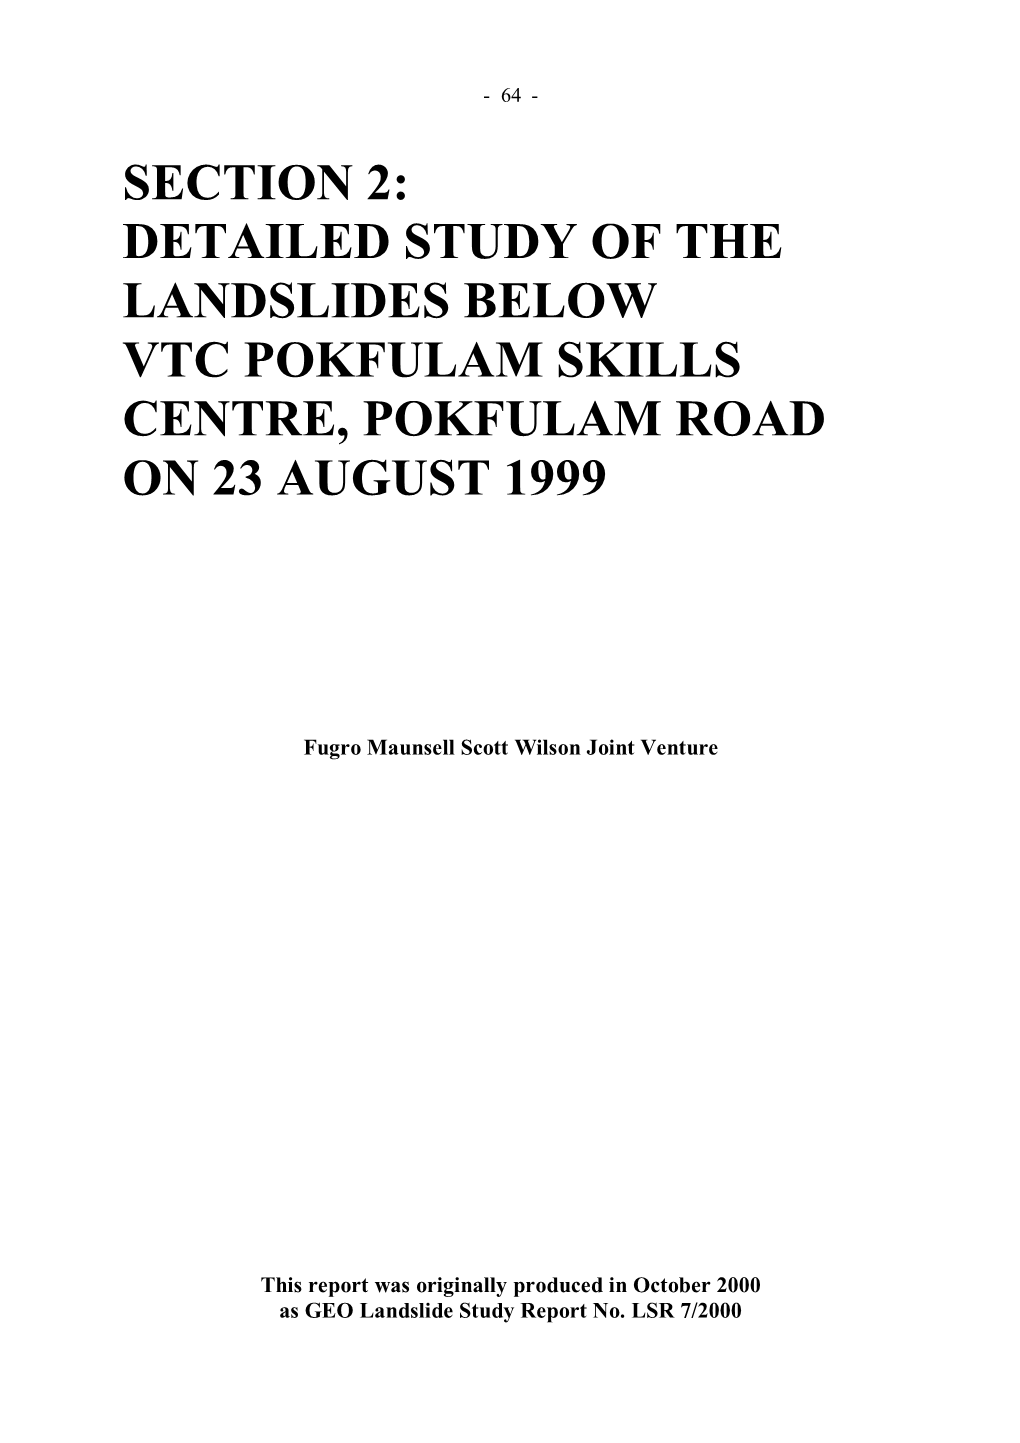 Section 2: Detailed Study of the Landslides Below Vtc Pokfulam Skills Centre, Pokfulam Road on 23 August 1999